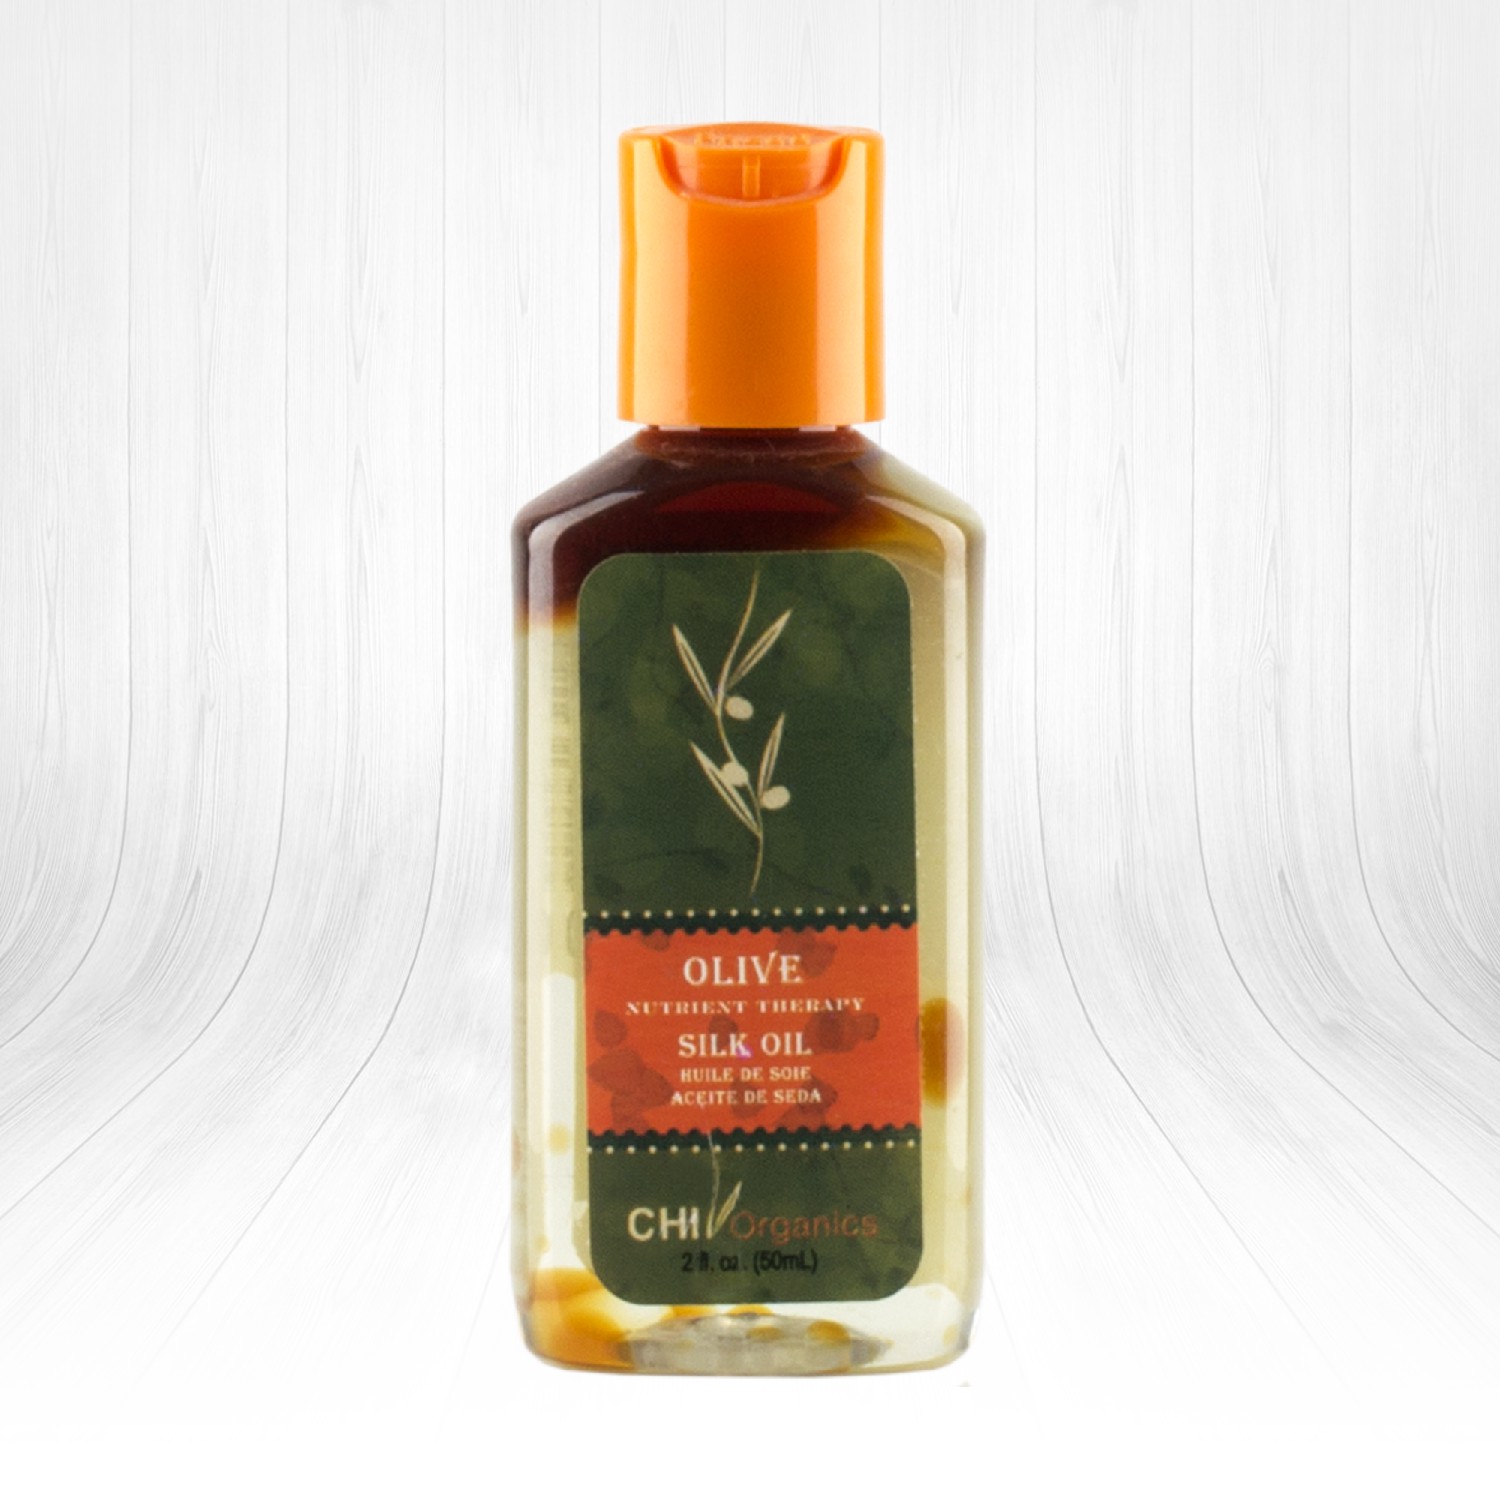 CHI Organics Olive Nutrient Therapy Silk Oil Zeytinyağlı ve İpek Yağı